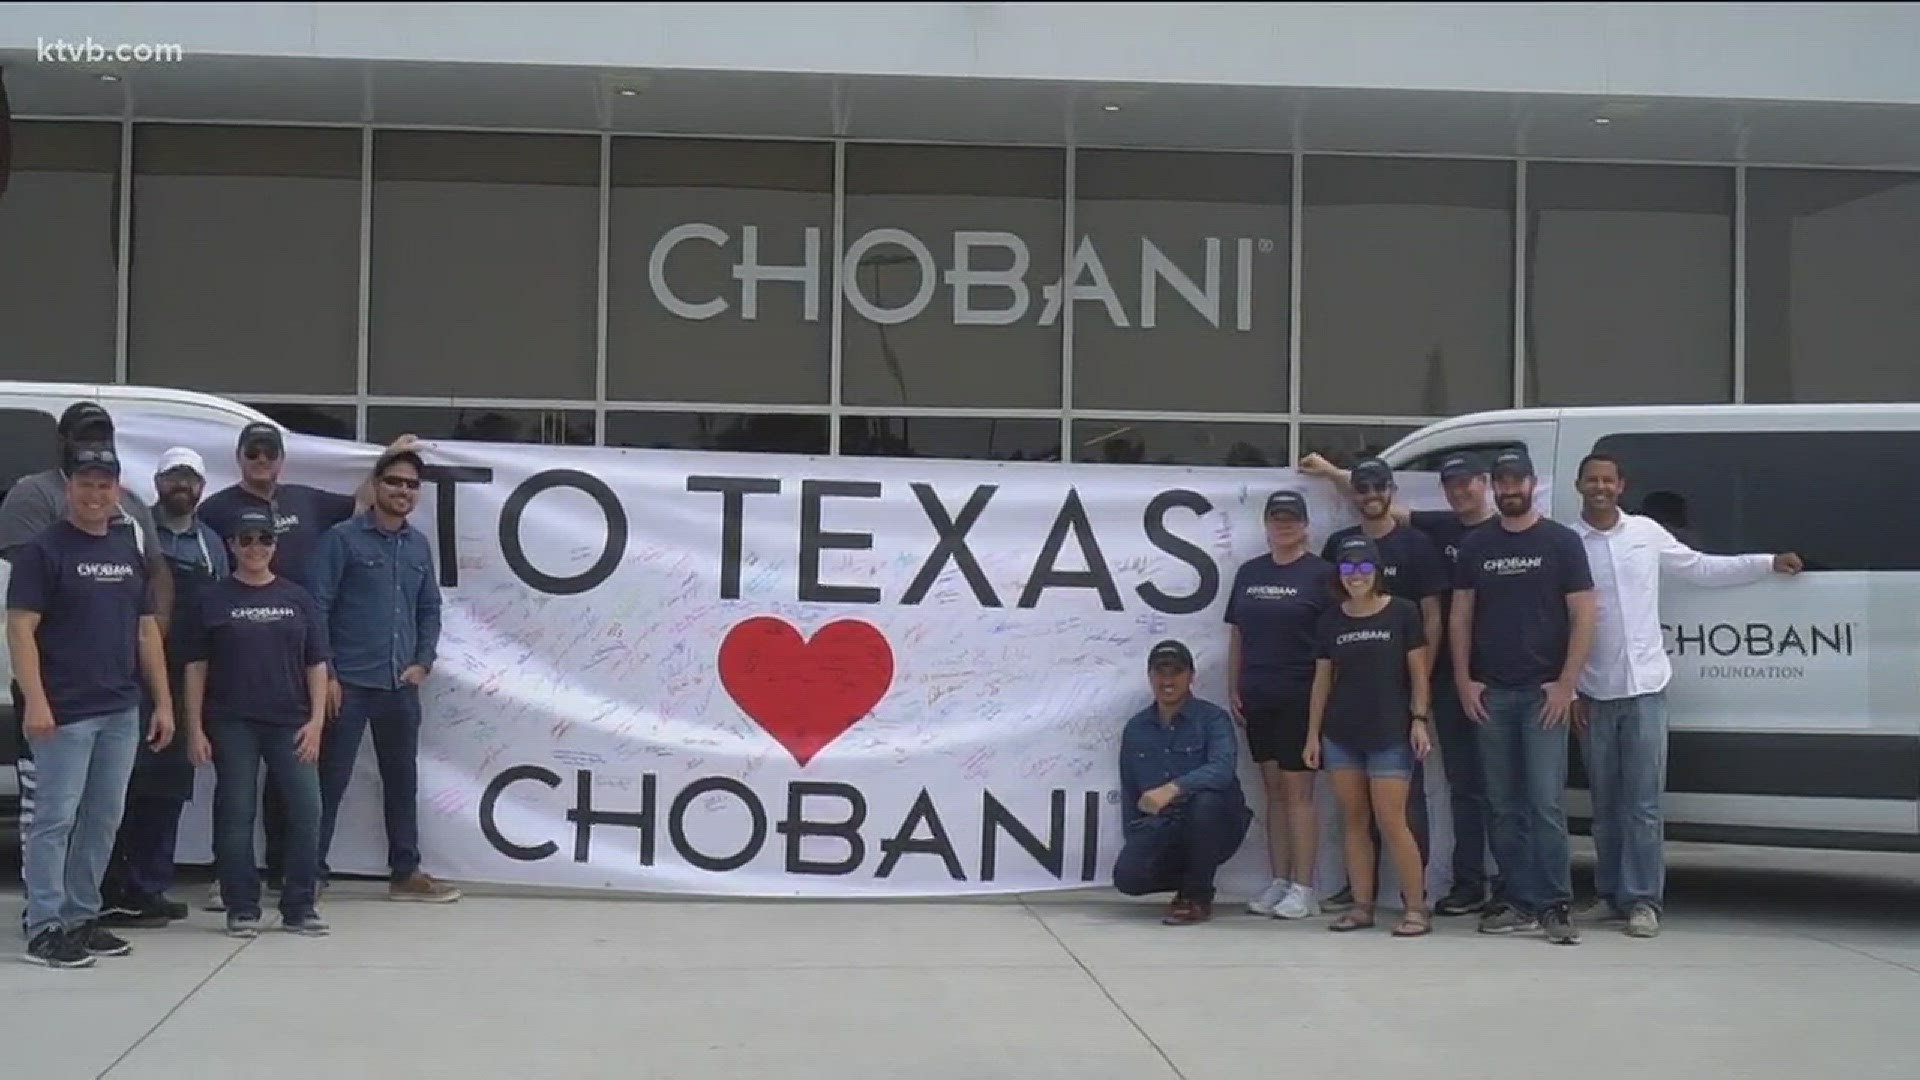 Chobani: A company that cares